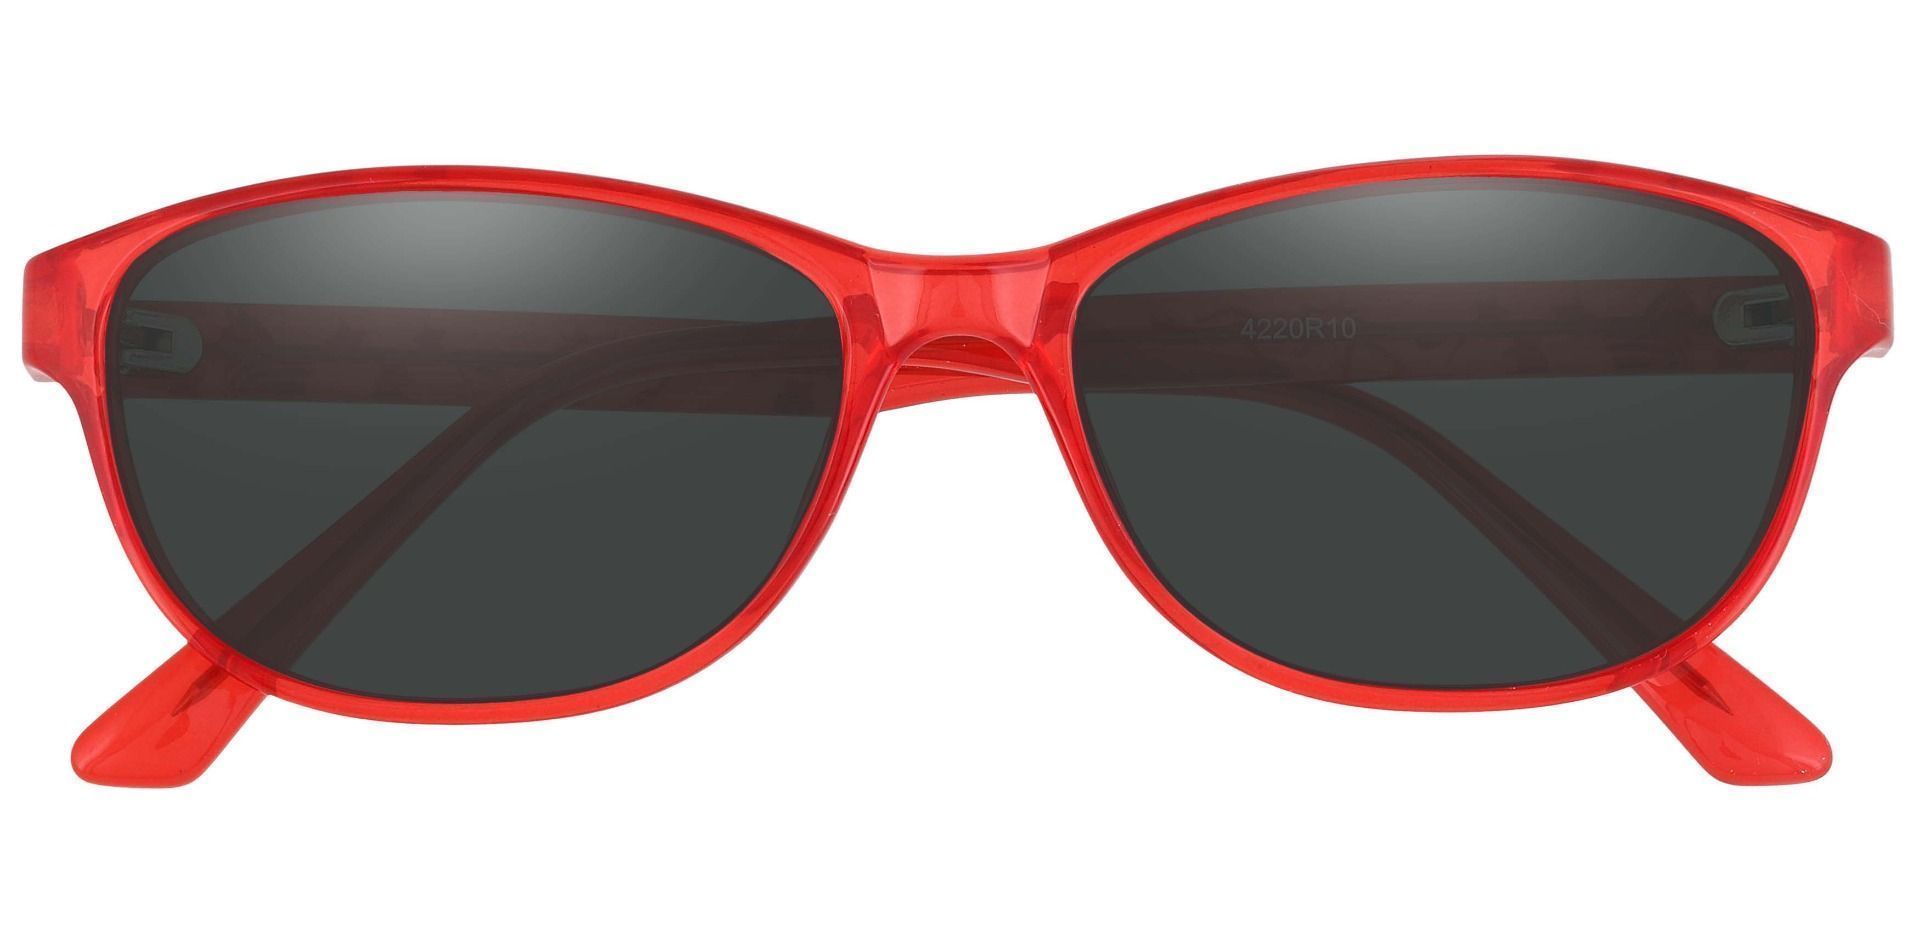 Alpine Oval Prescription Sunglasses - Red Frame With Gray Lenses